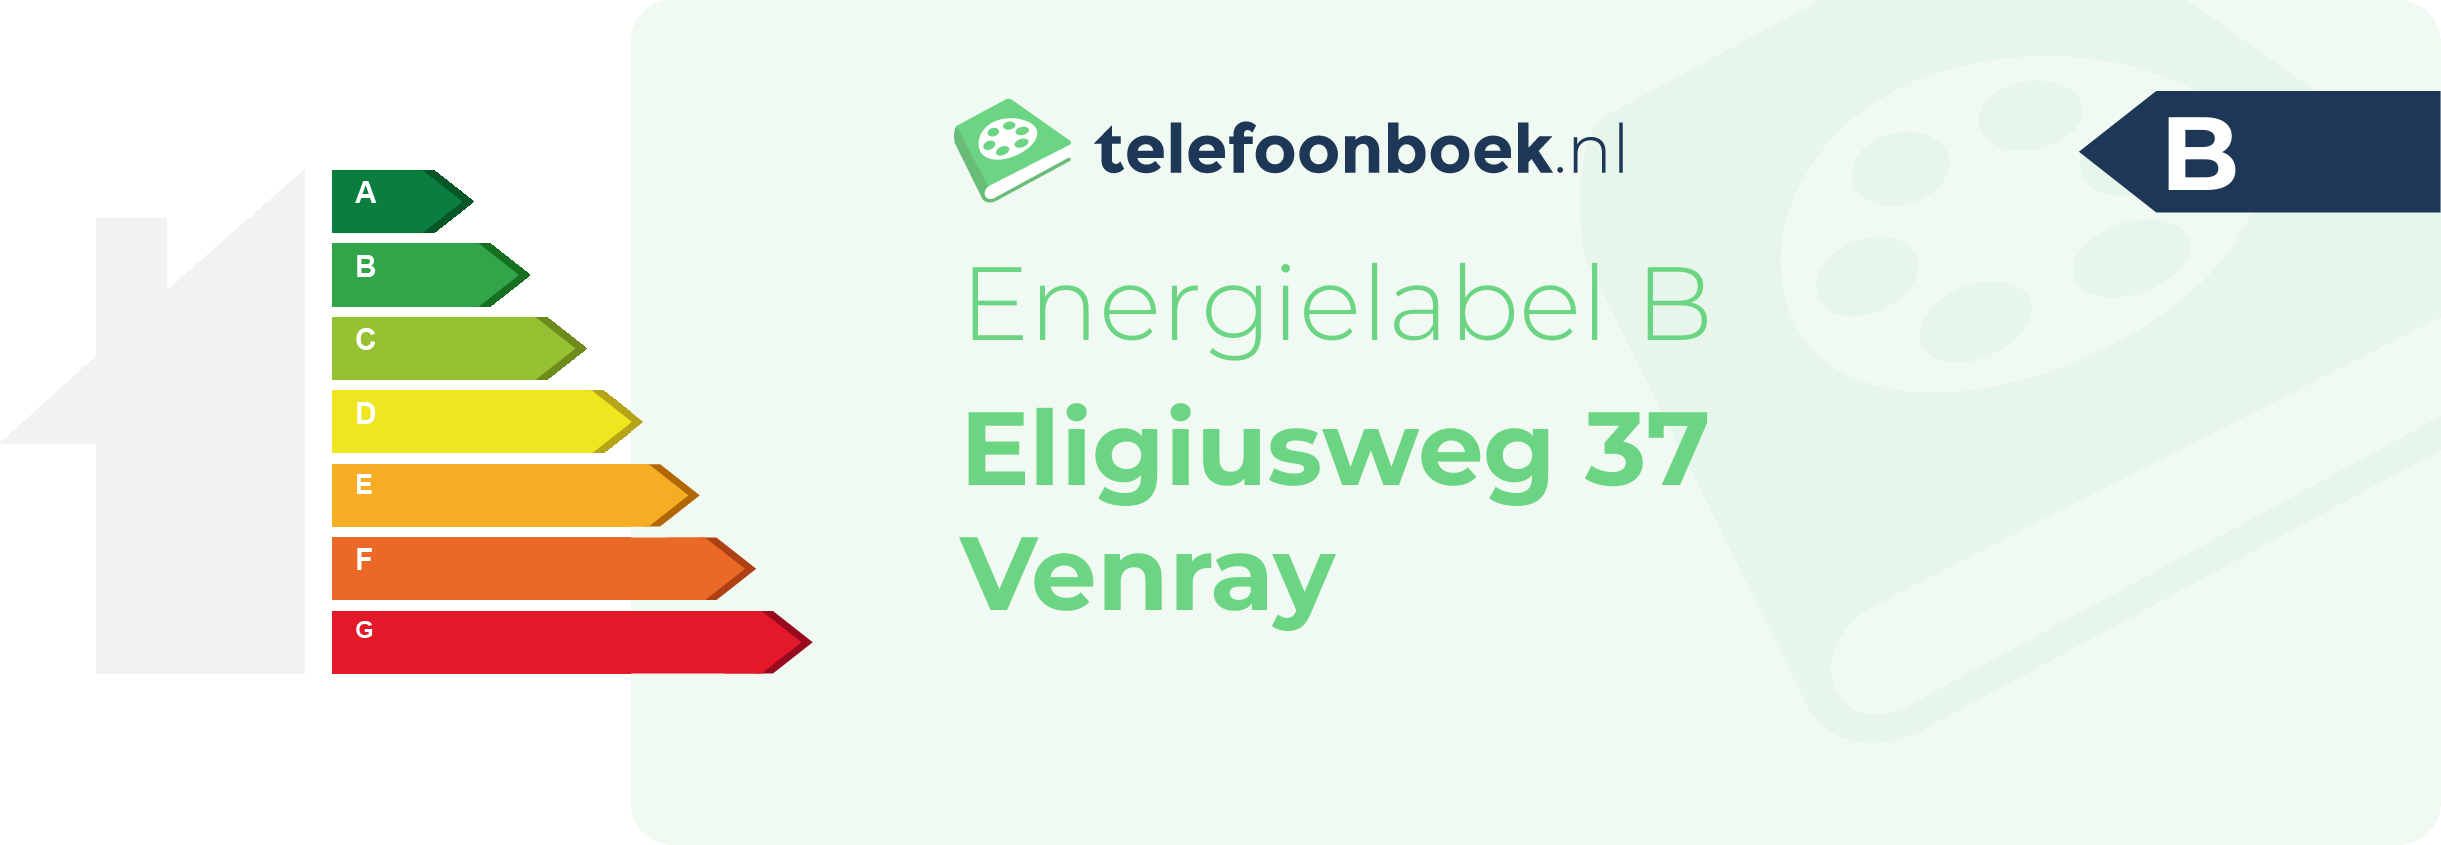 Energielabel Eligiusweg 37 Venray